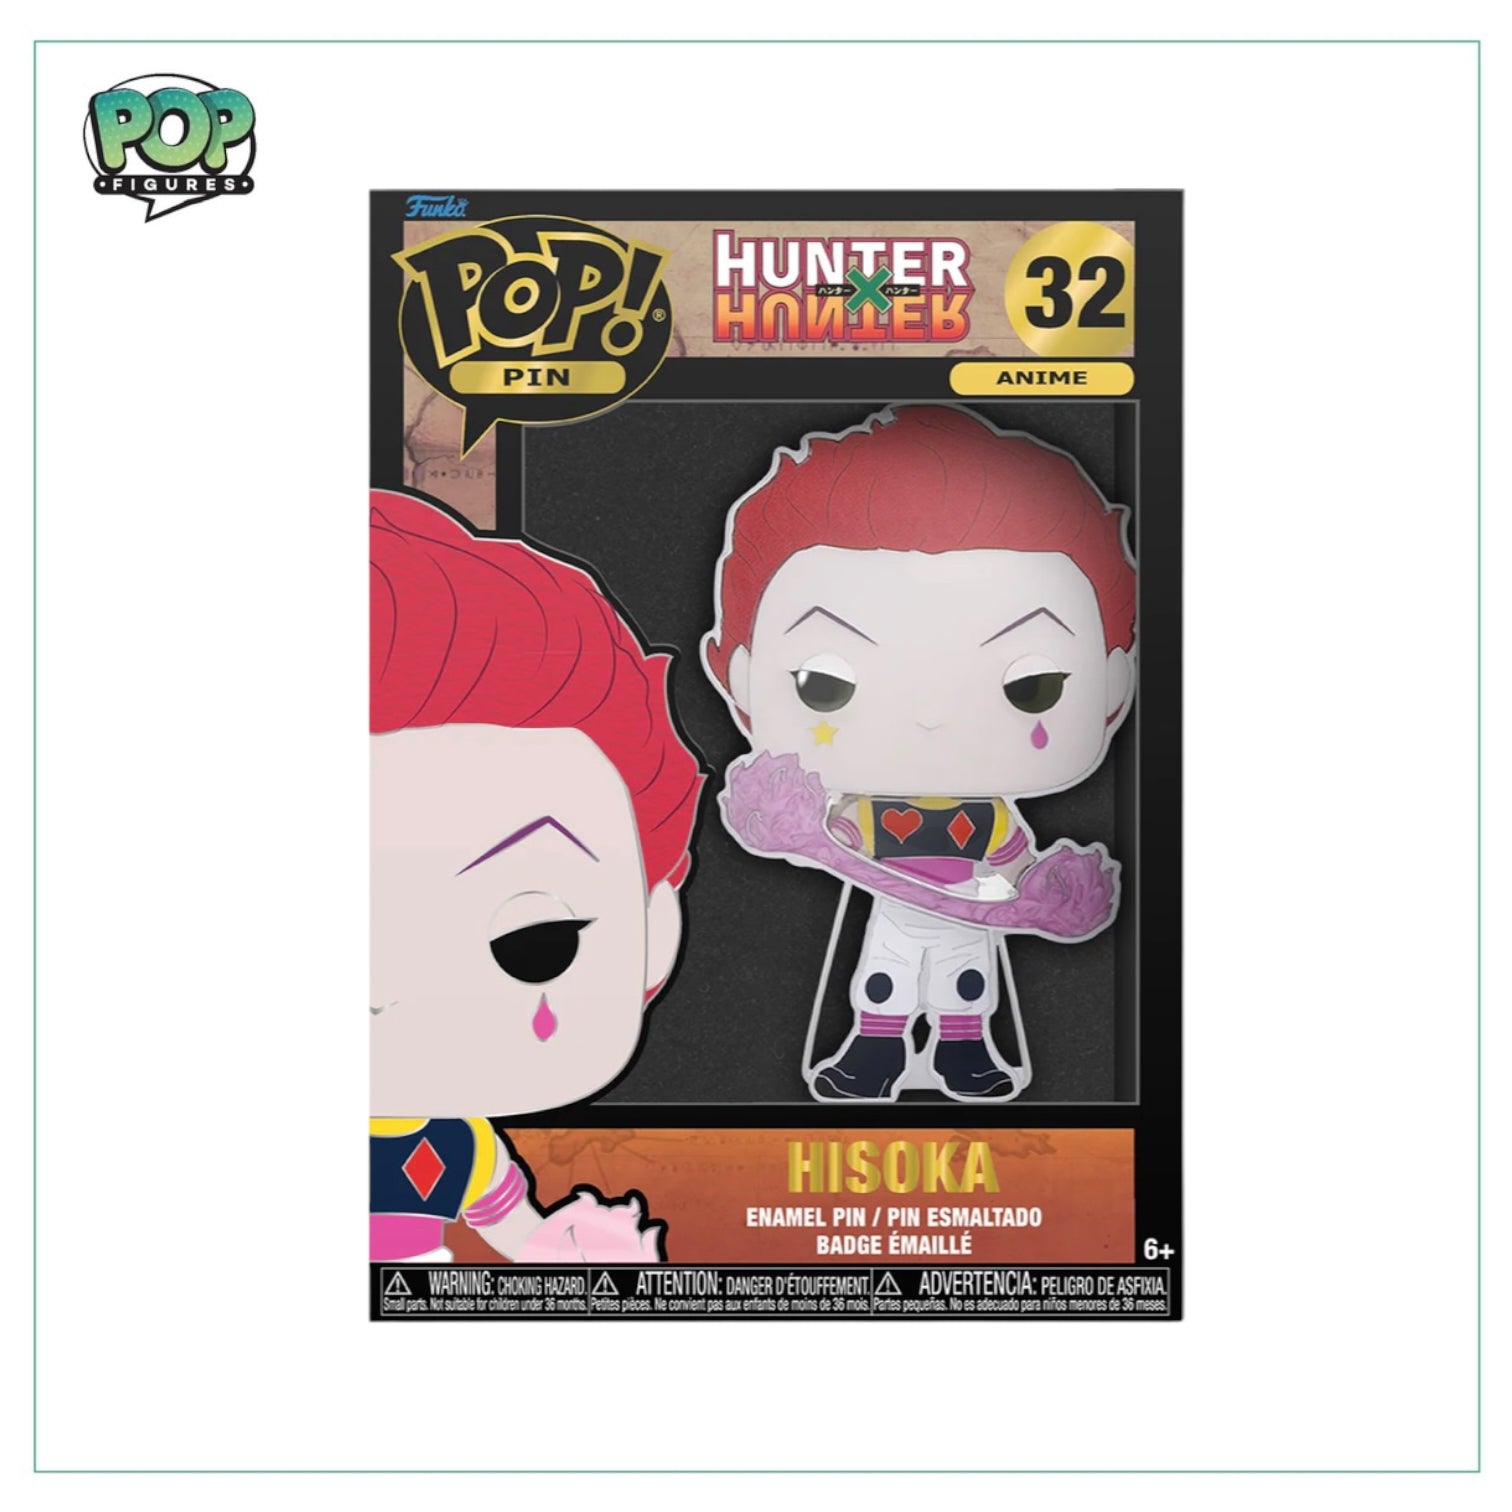 Hisoka #32 Funko Pop Pin! - HUNTERxHUNTER